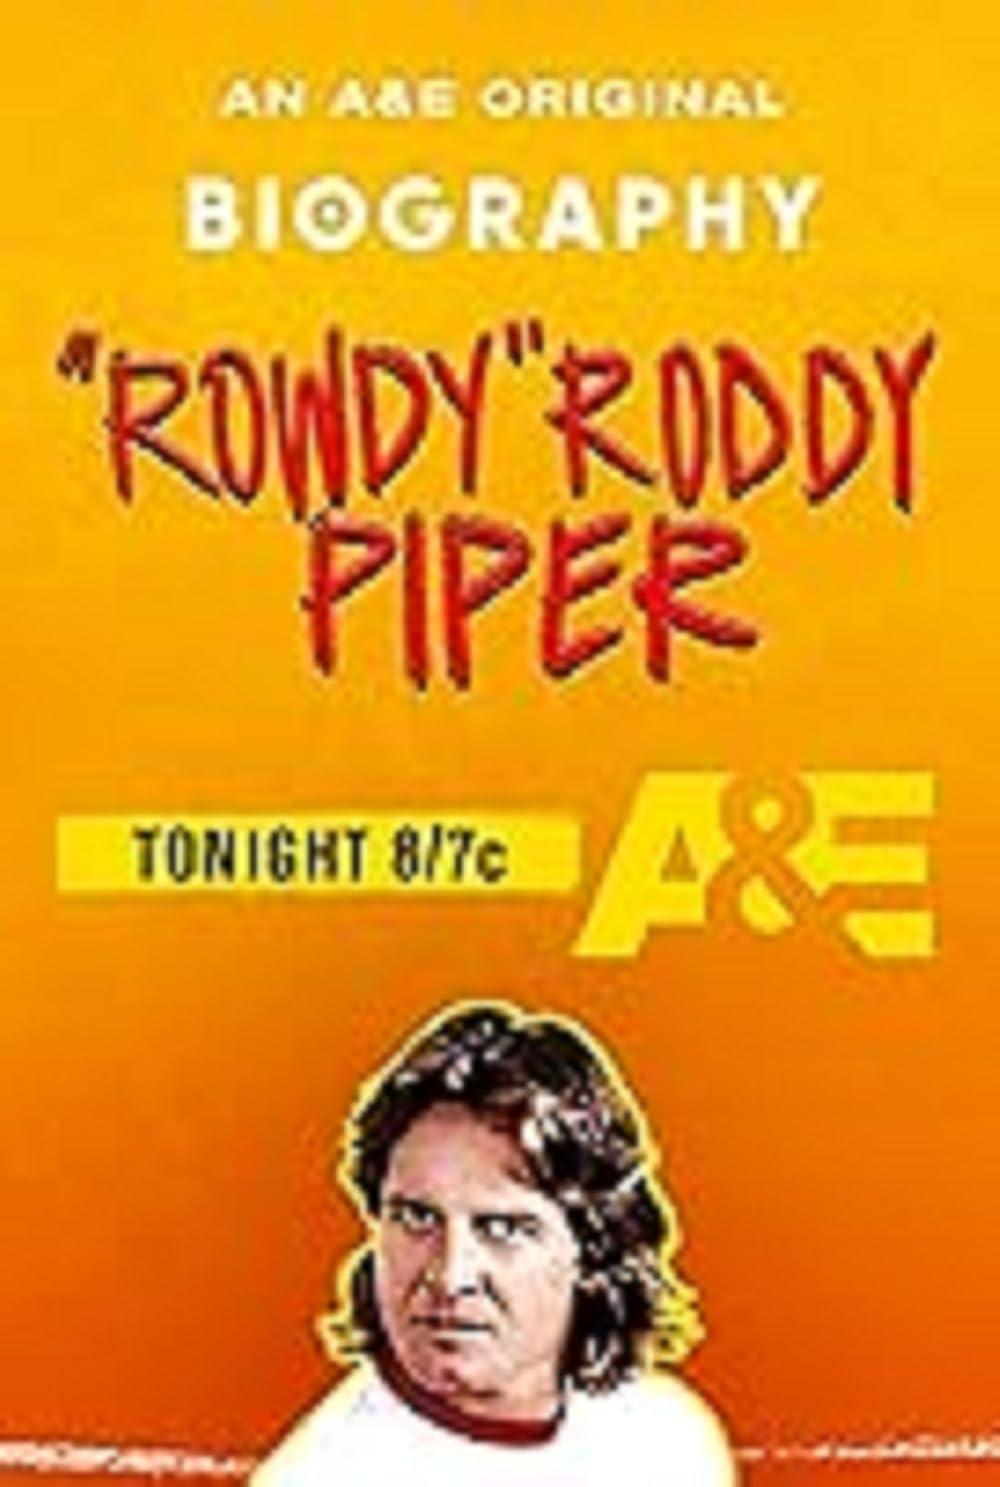 Biography WWE Legends: Rowdy Roddy Piper